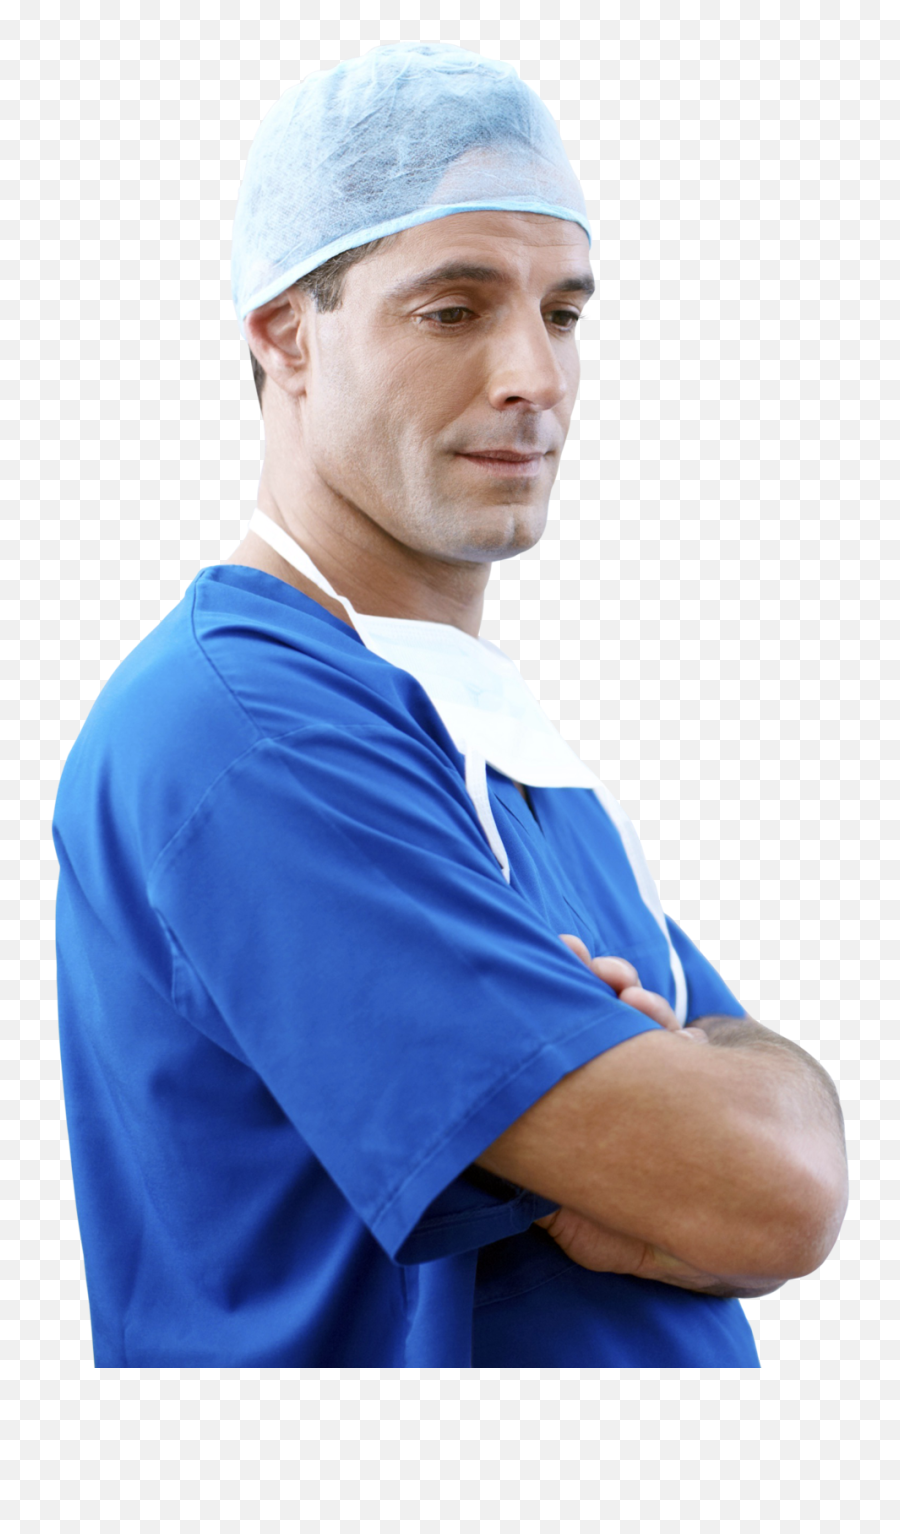 Doctors Png Image For Free Download - Doctor Png,Doctor Transparent Background